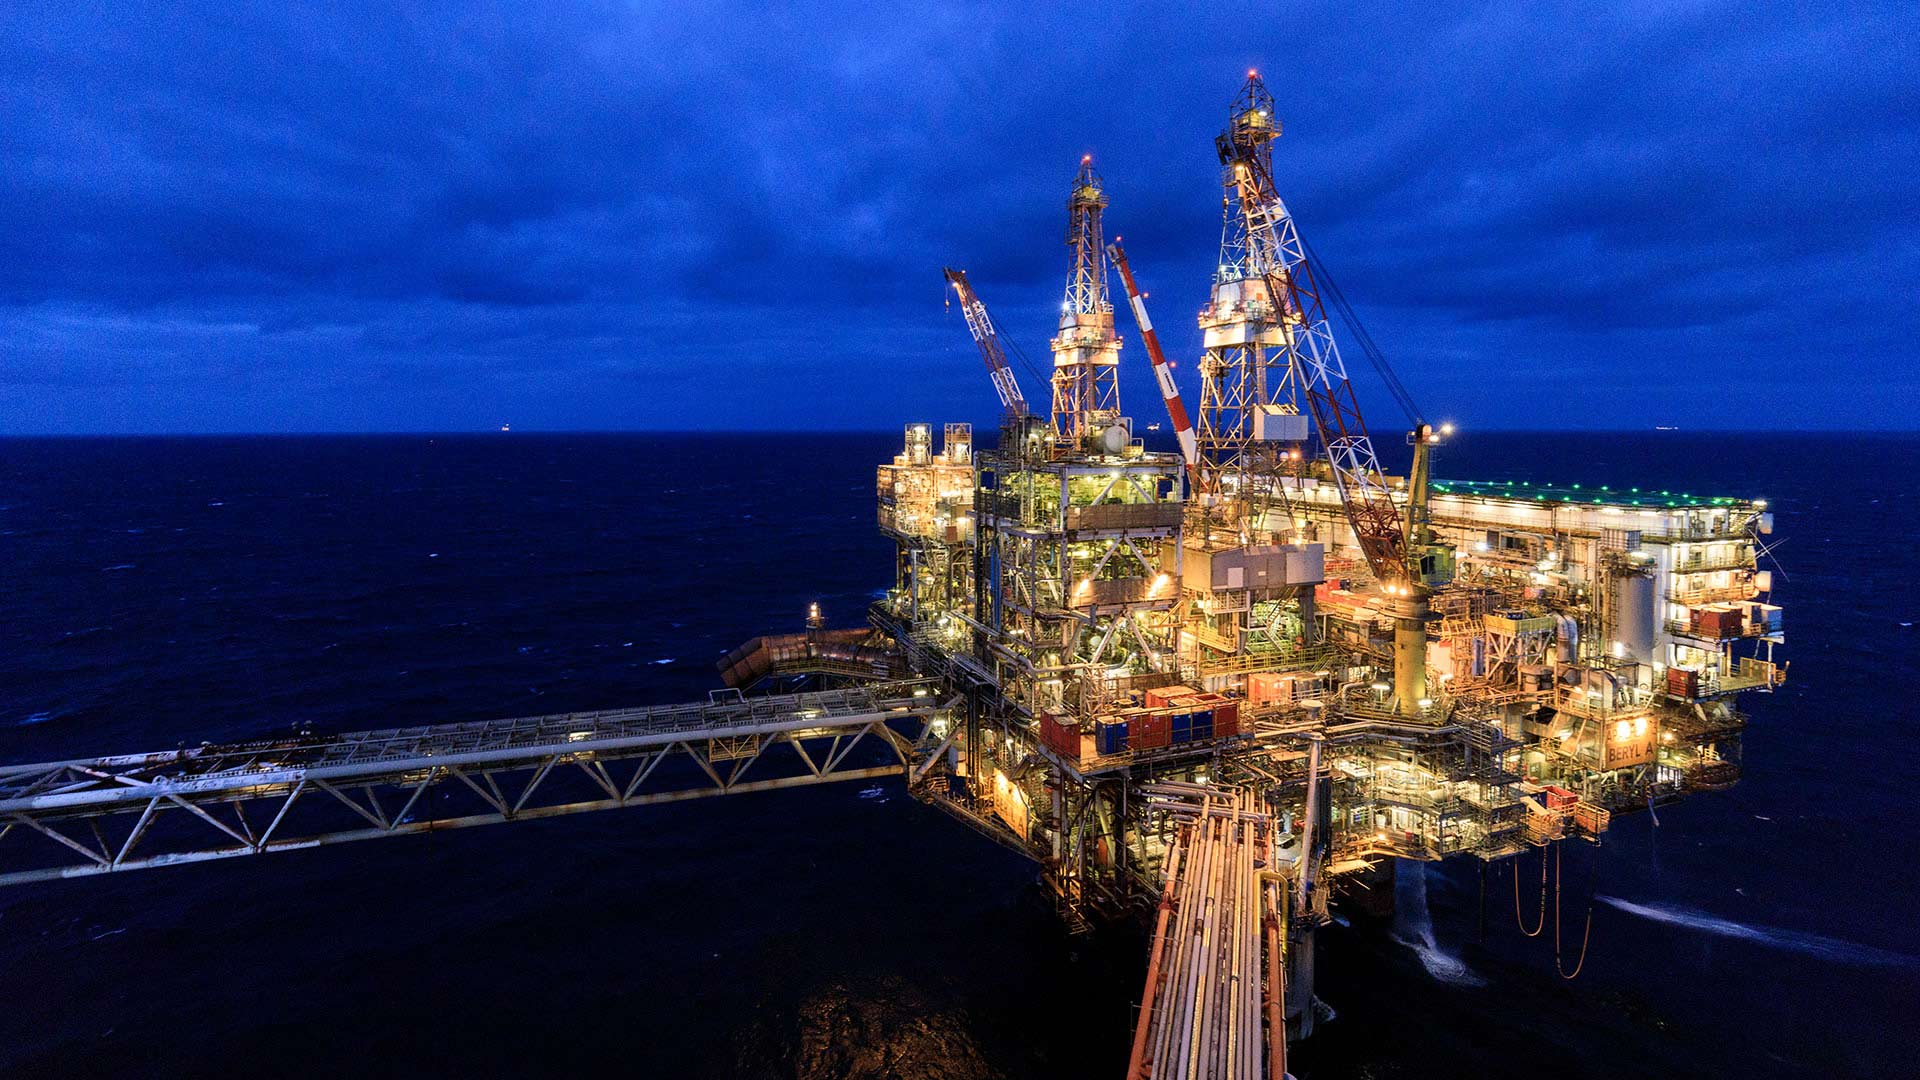 Oil drilling rig in the North Sea